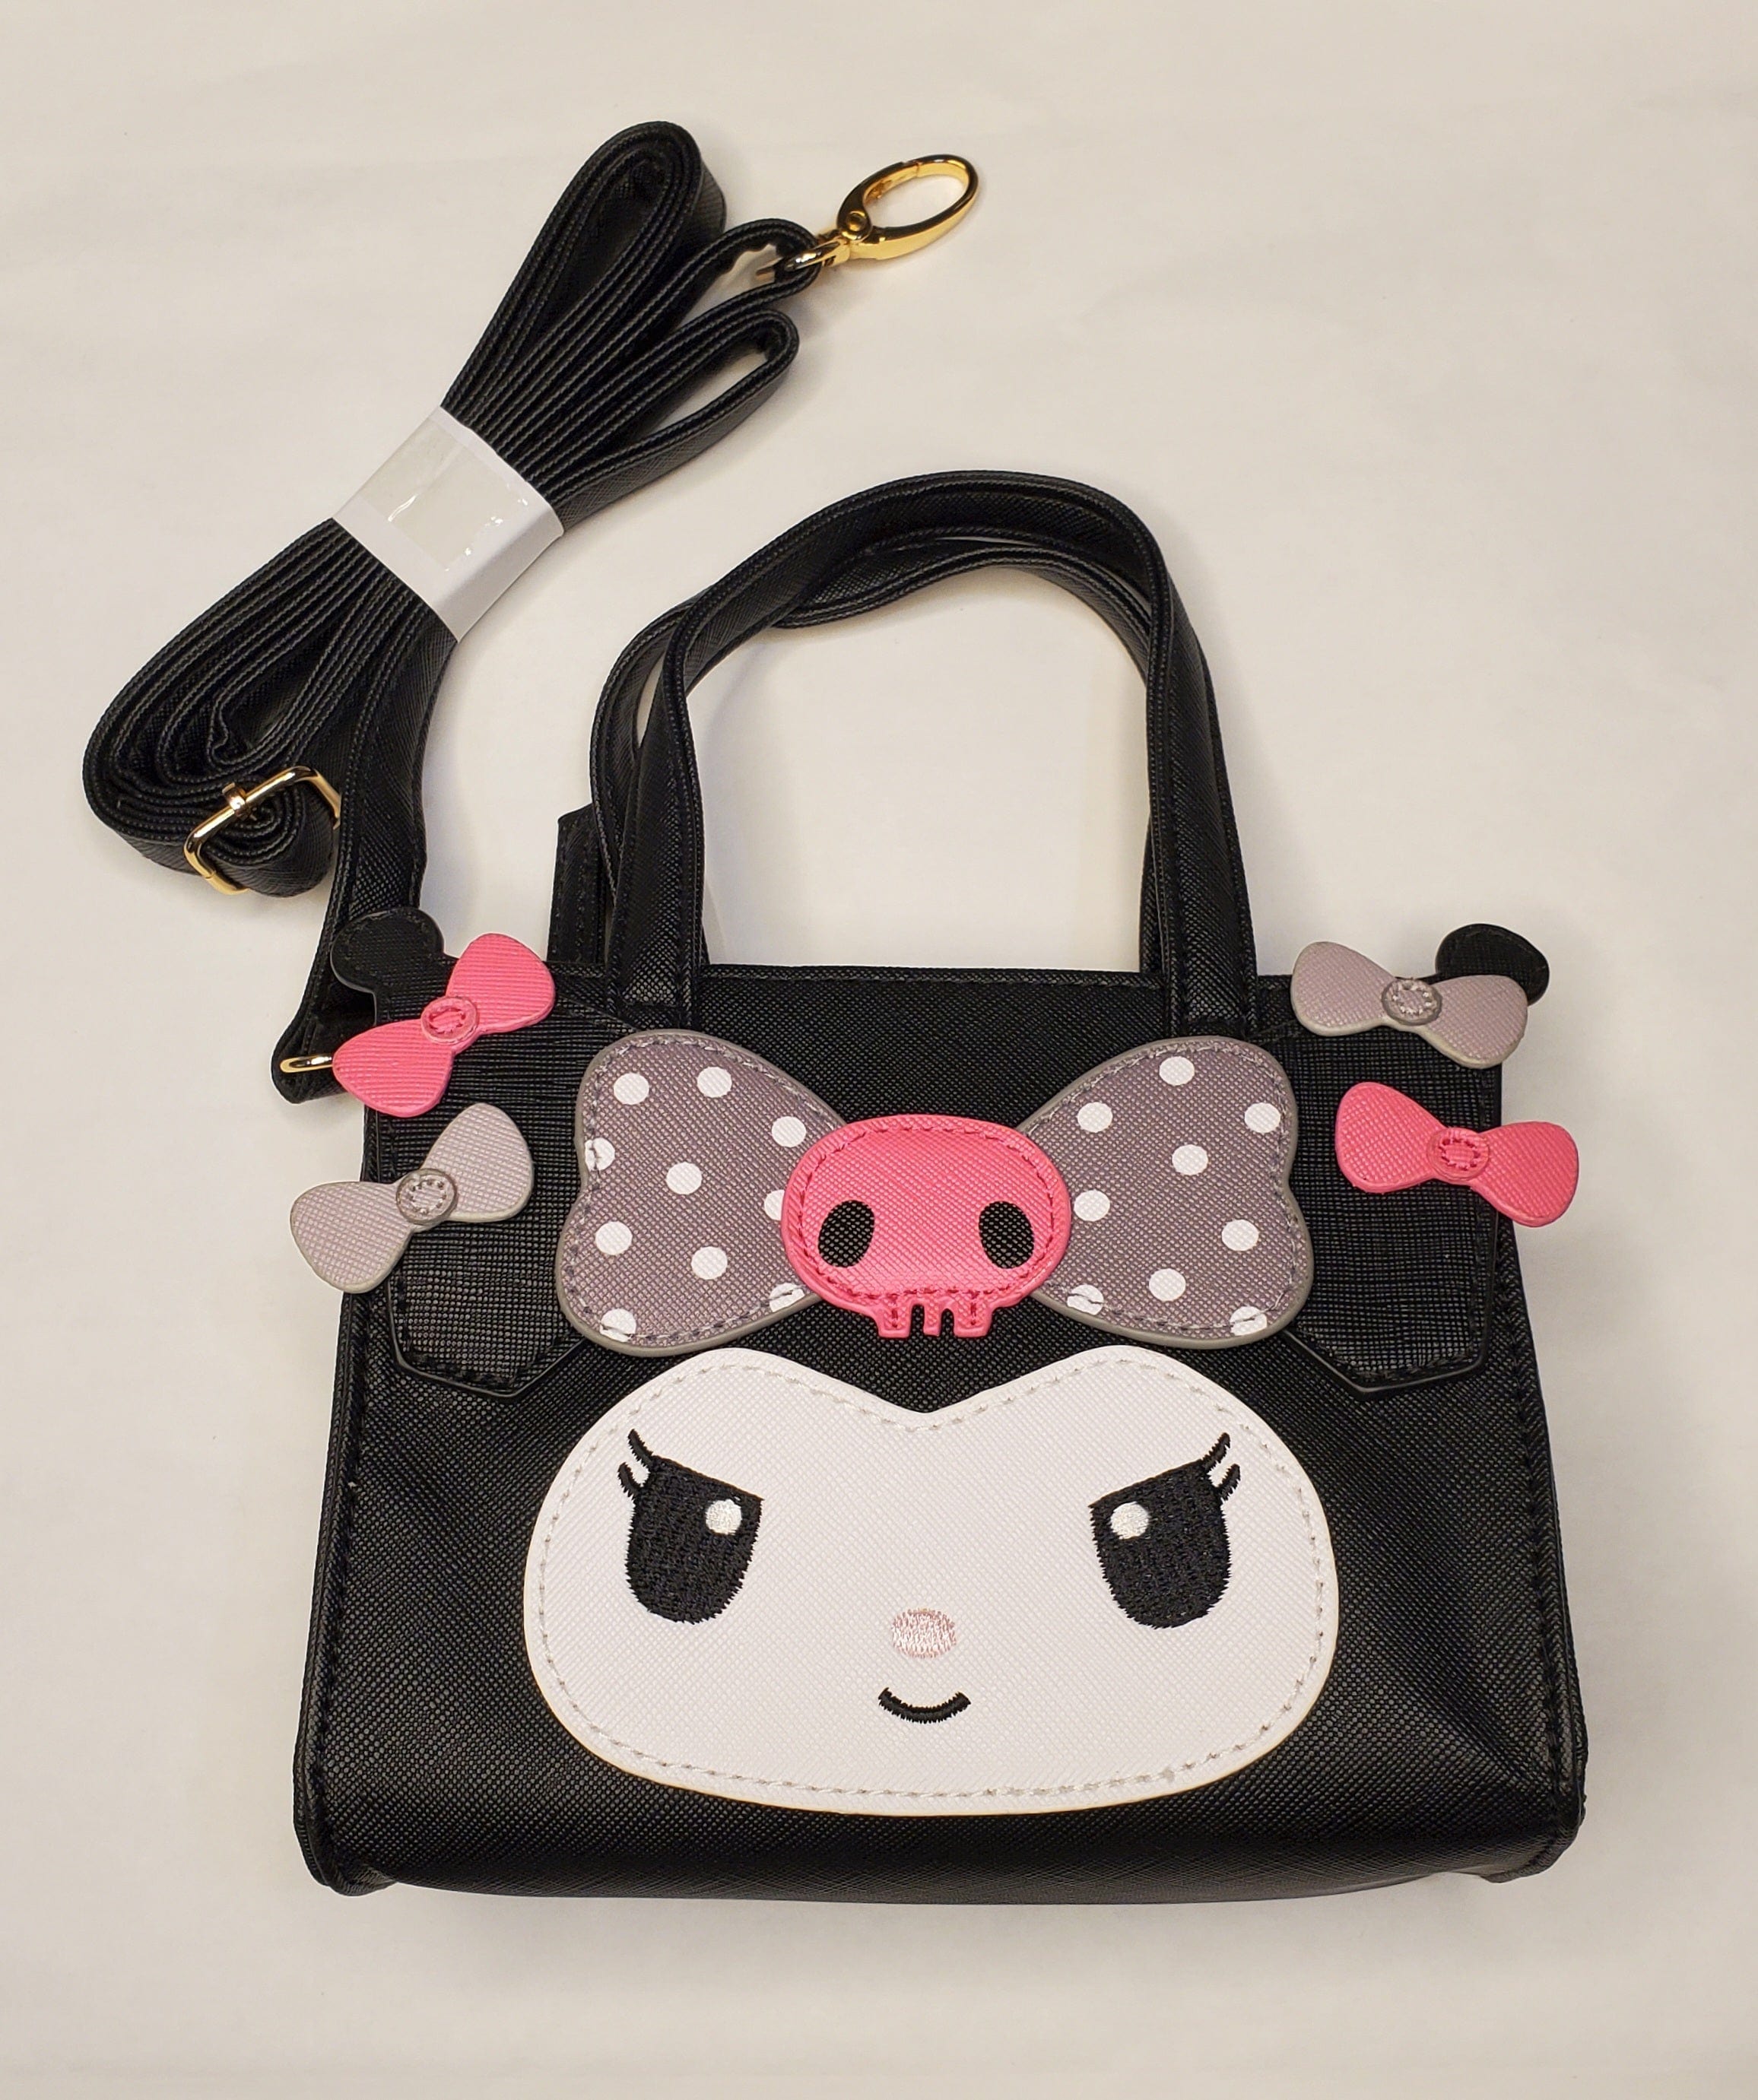 Enesco Sanrio Original Kuromi Handbags with Shoulder Straps Black Kawaii Gifts 4901610892459